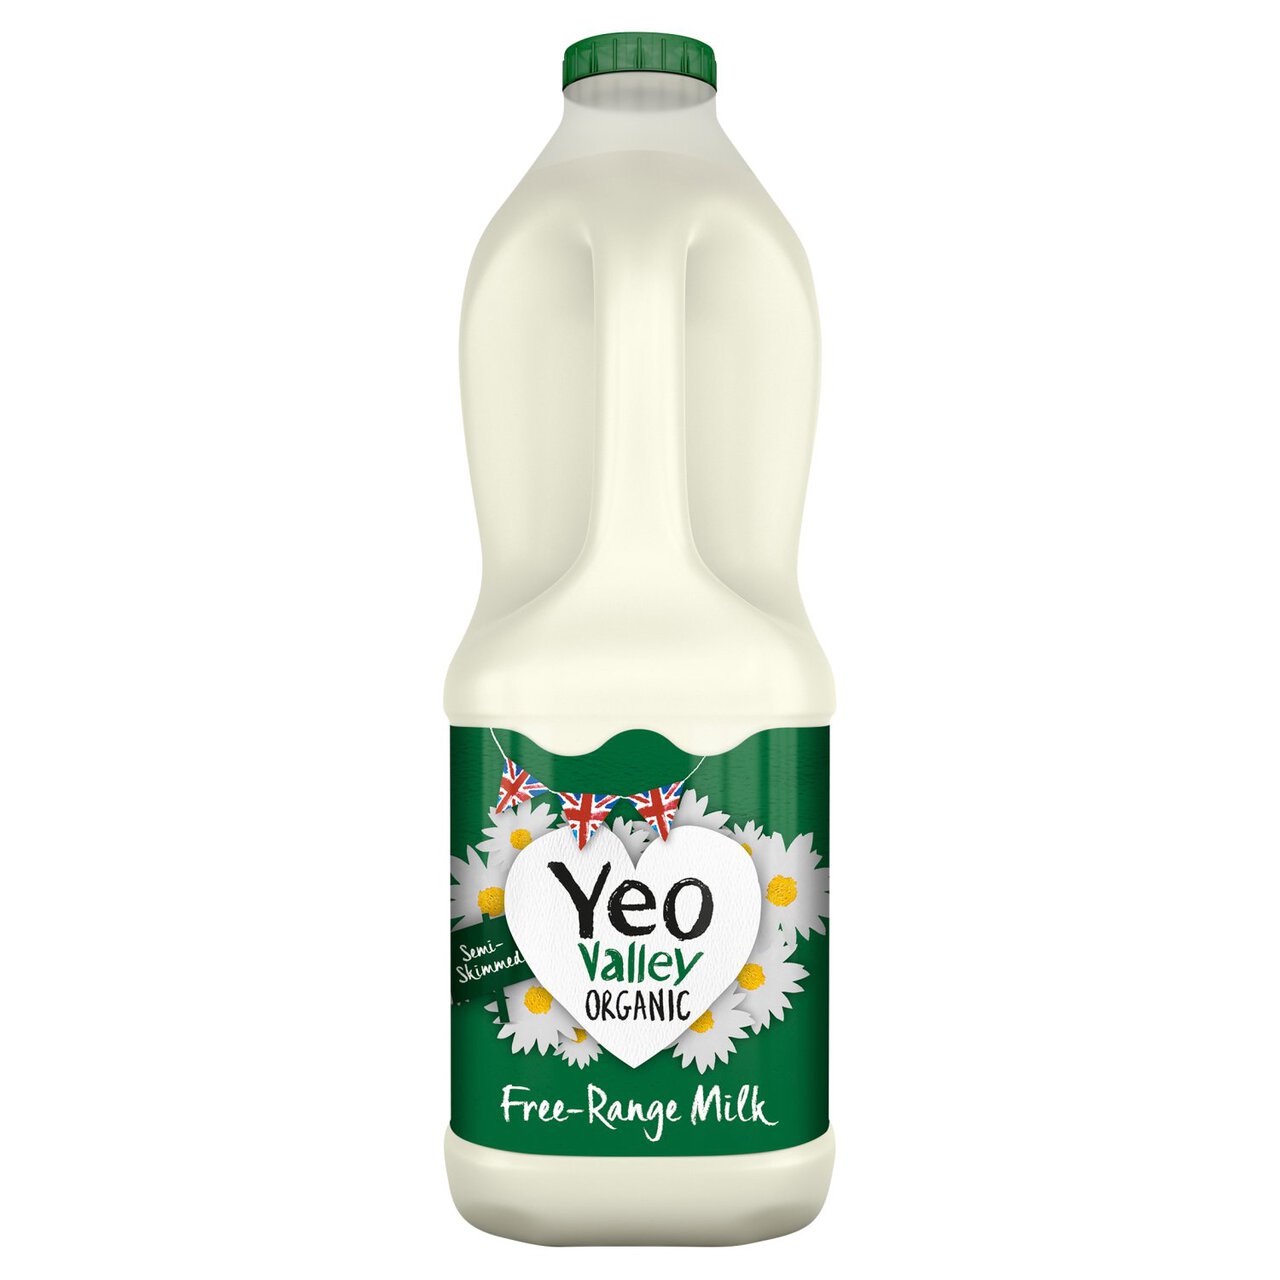 Yeo Valley Organic Semi-Skimmed Milk 2l